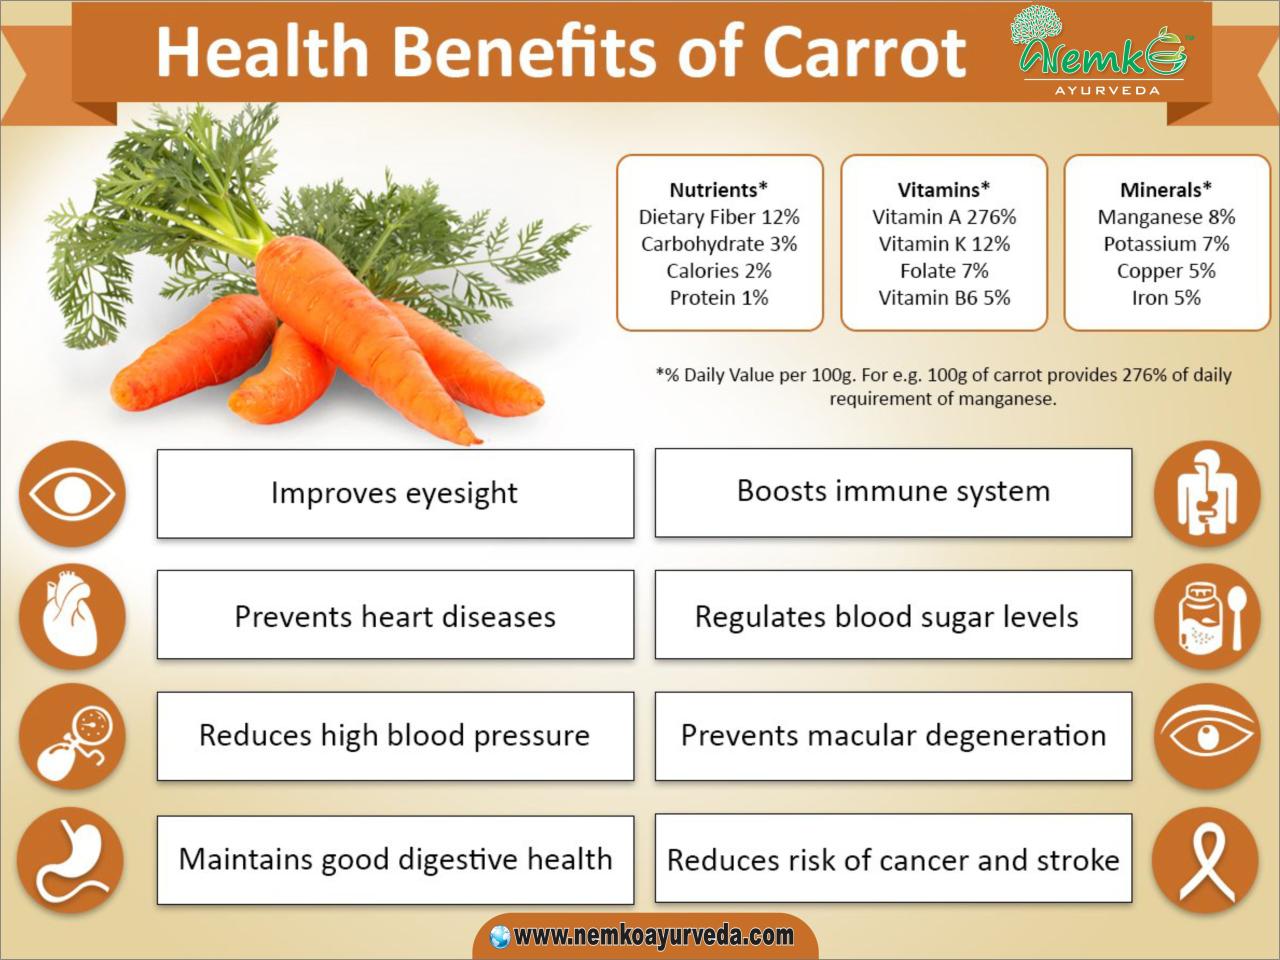 Carrots nutrition